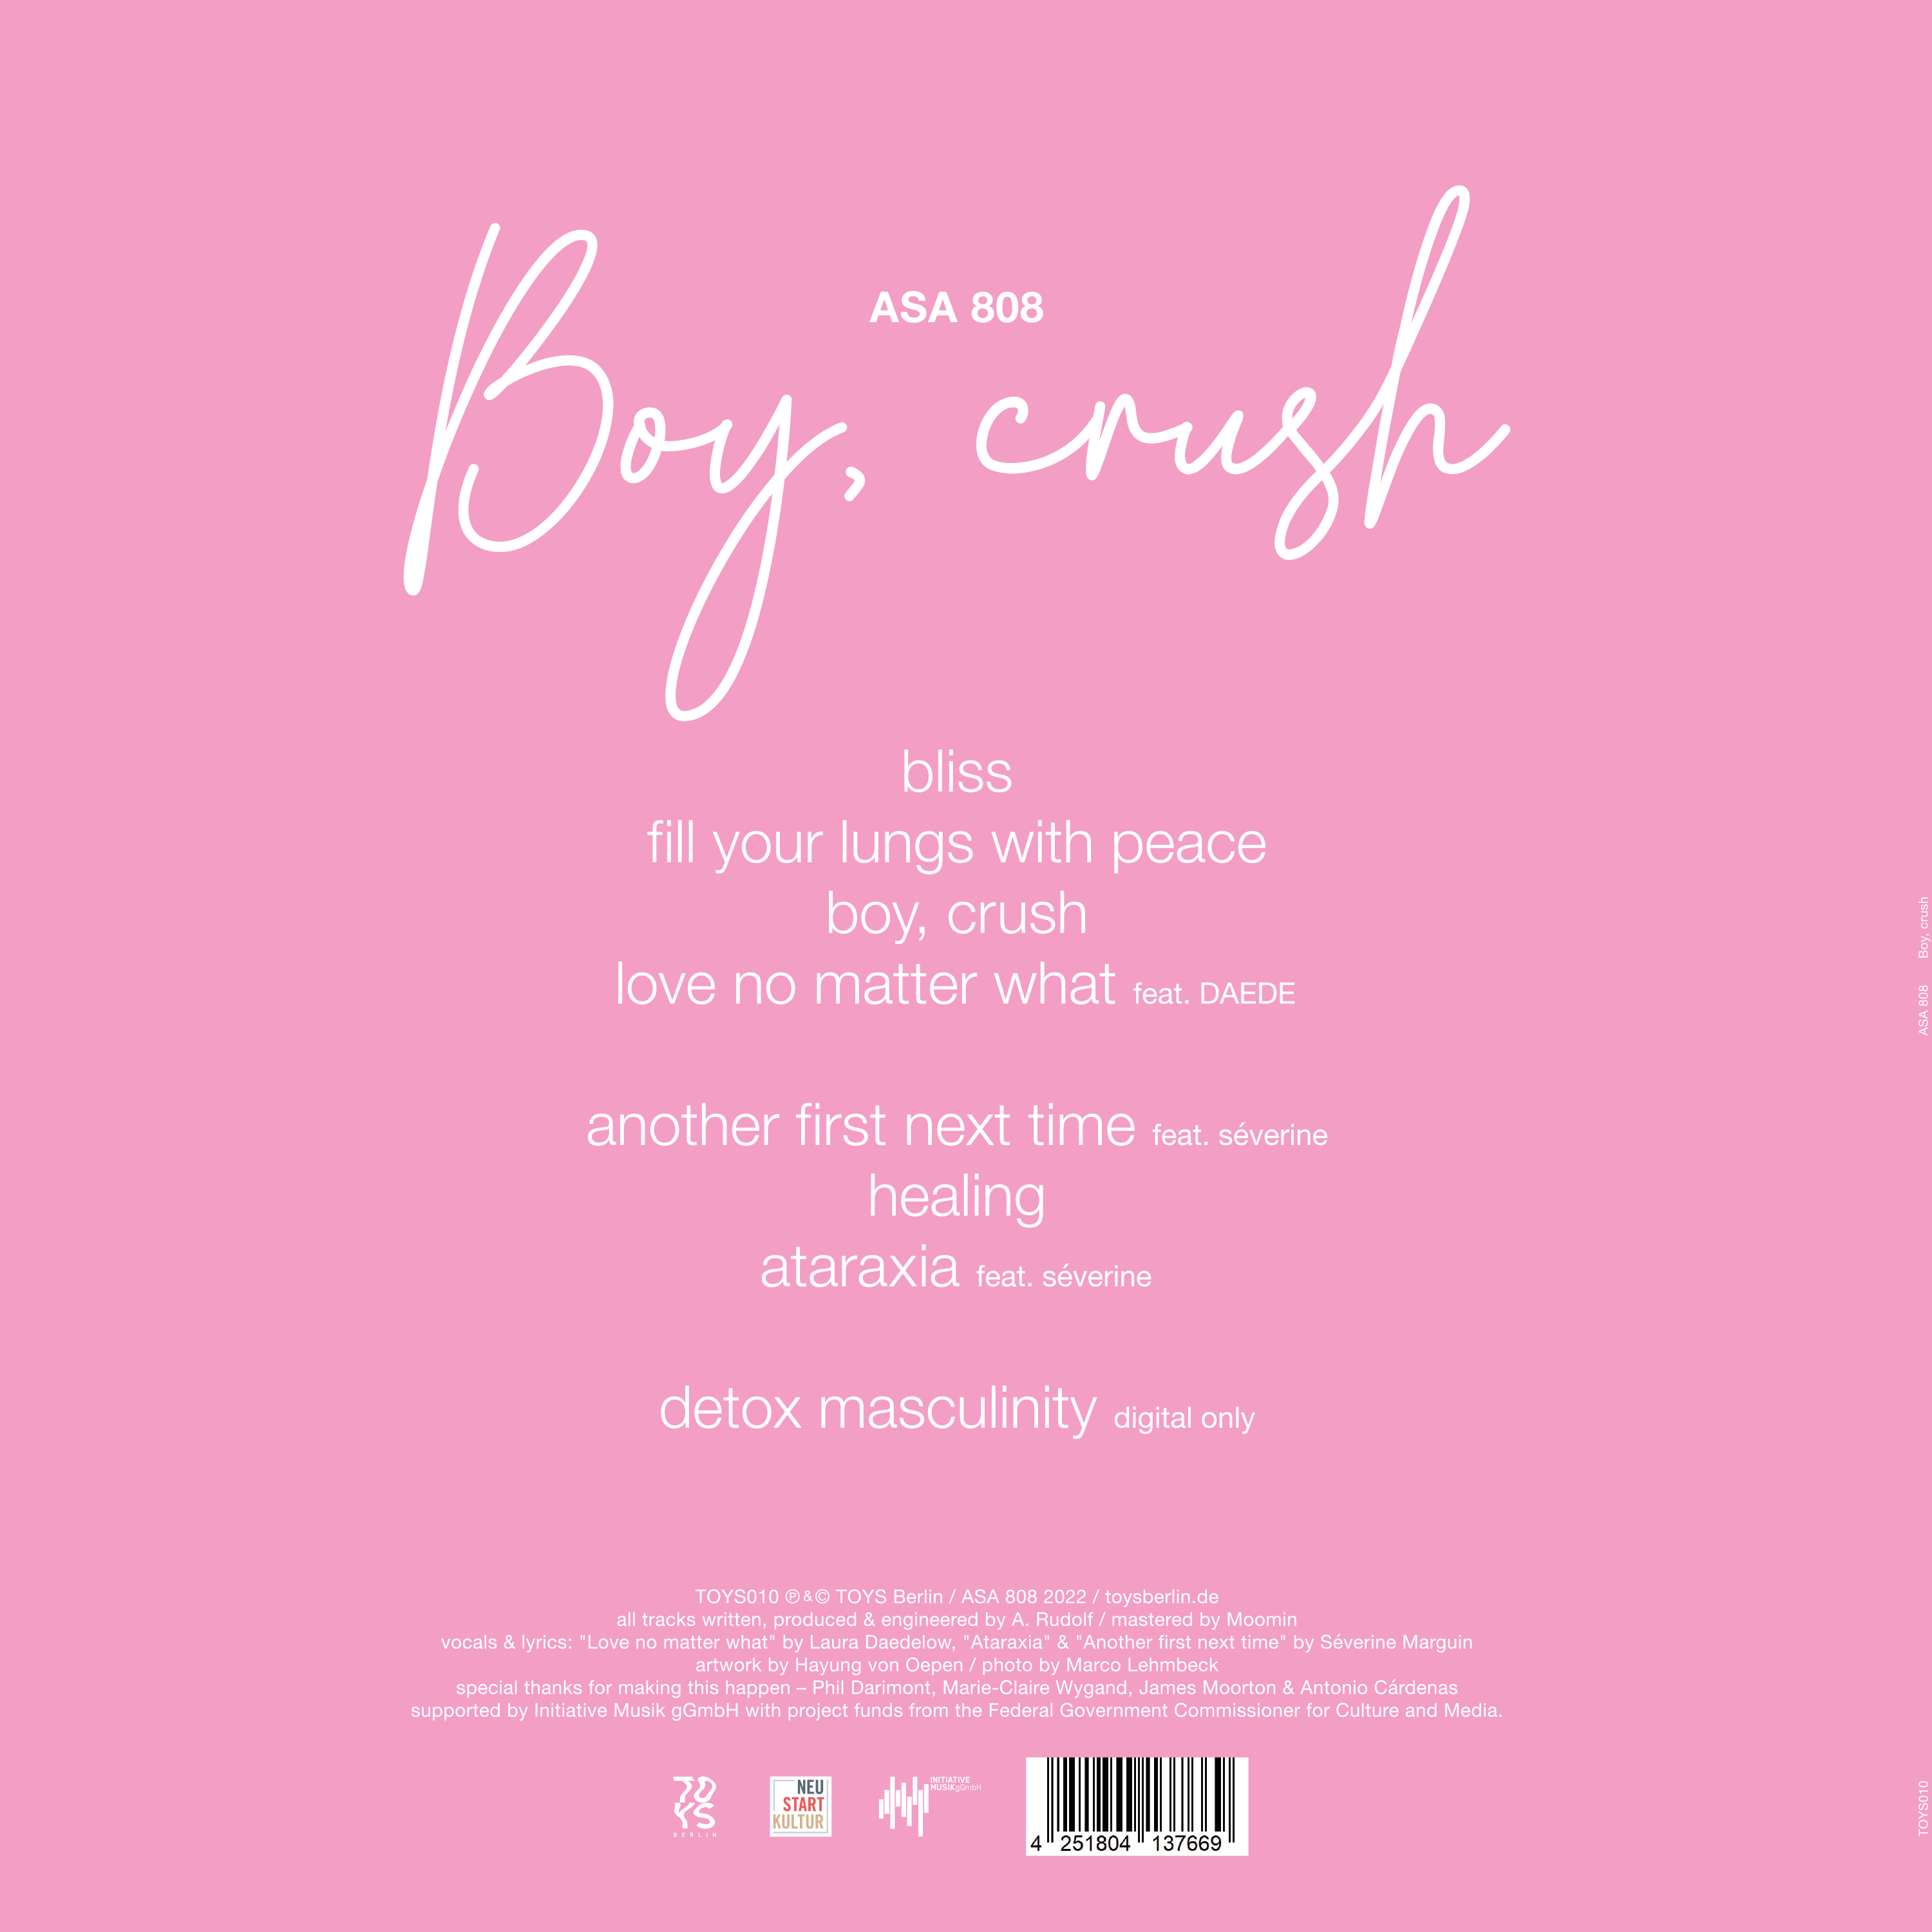 ASA 808 - Boy, crush : LP